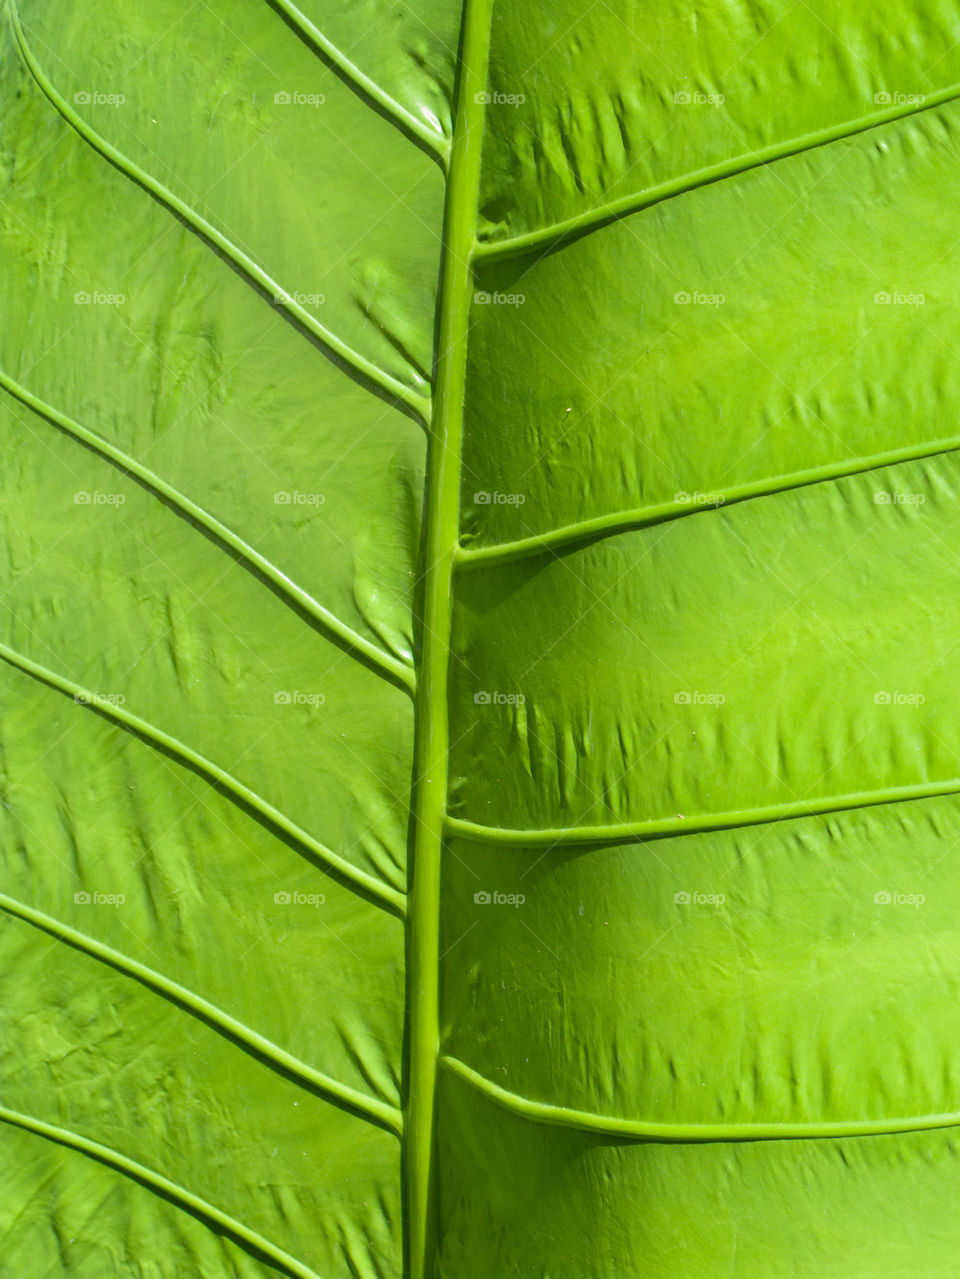 Exotic green plant leaf